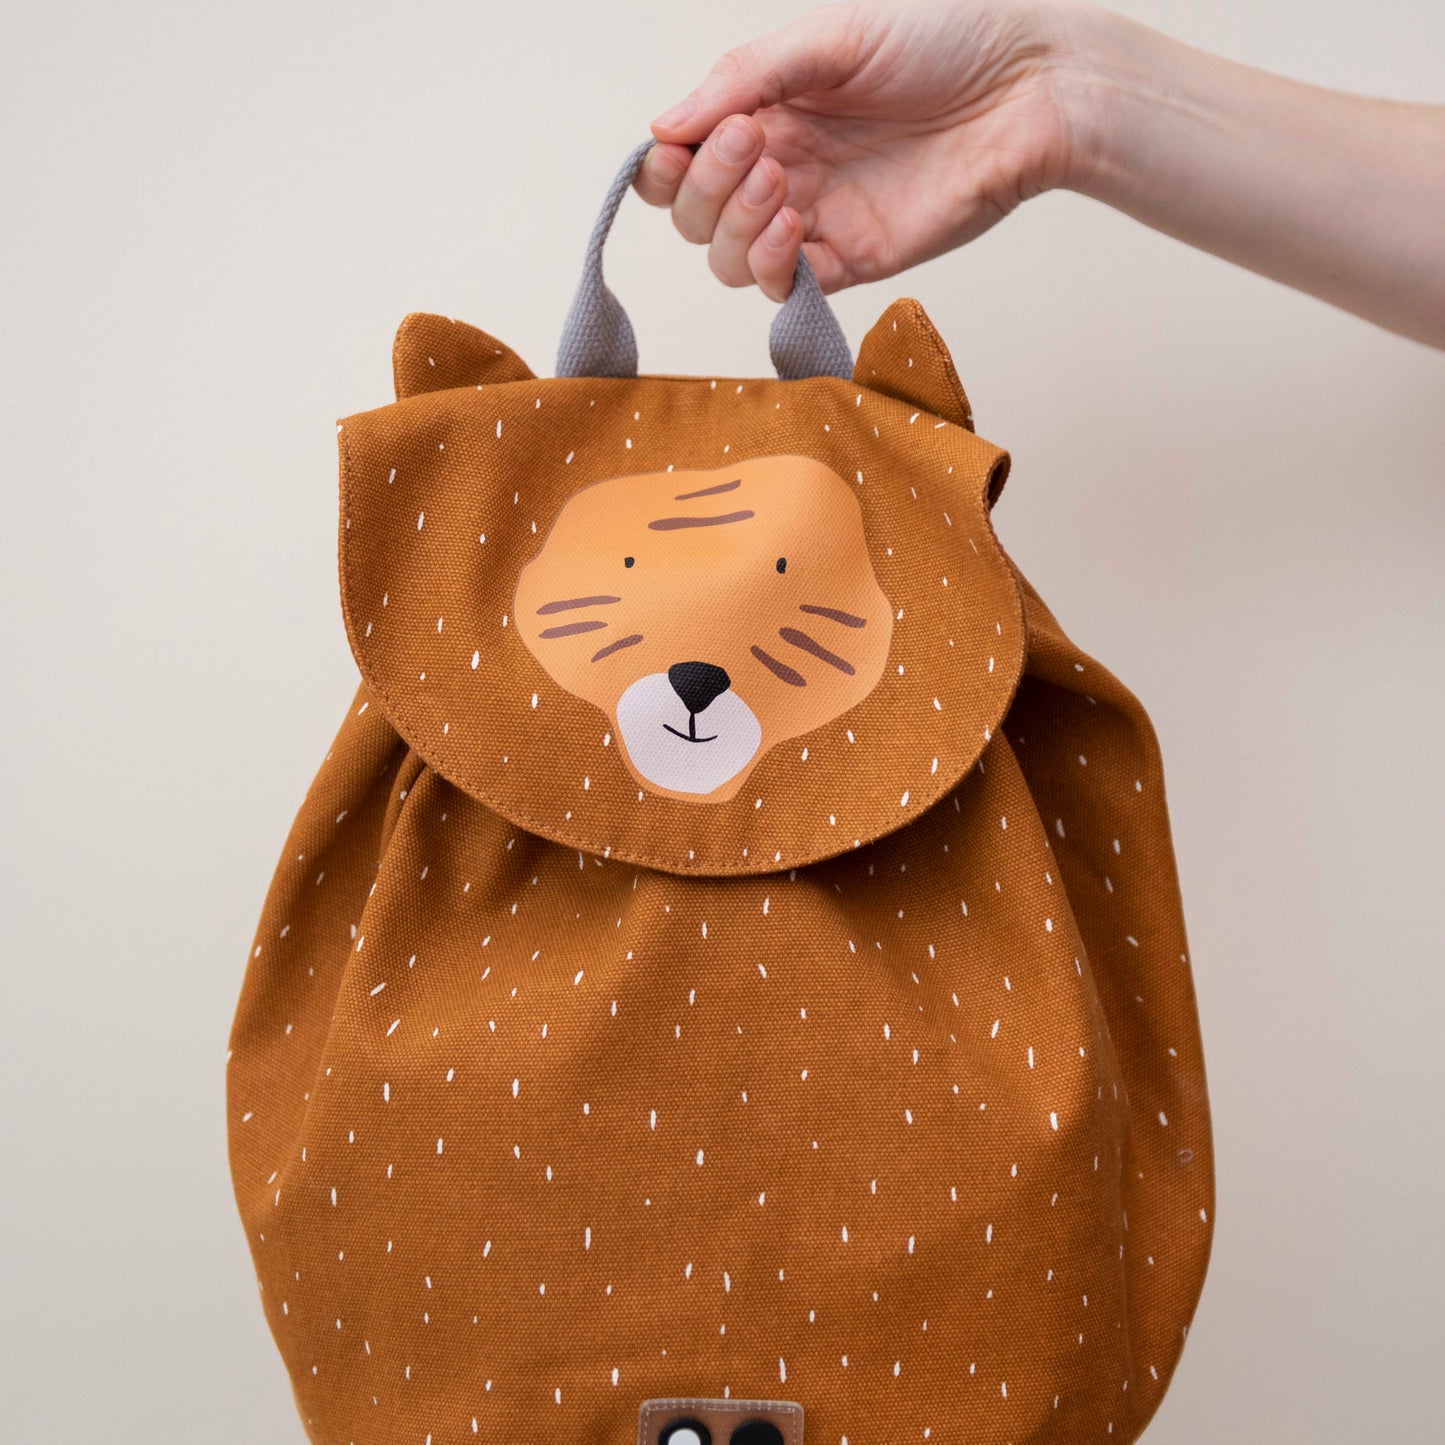 Backpack Mini - Mr. Tiger